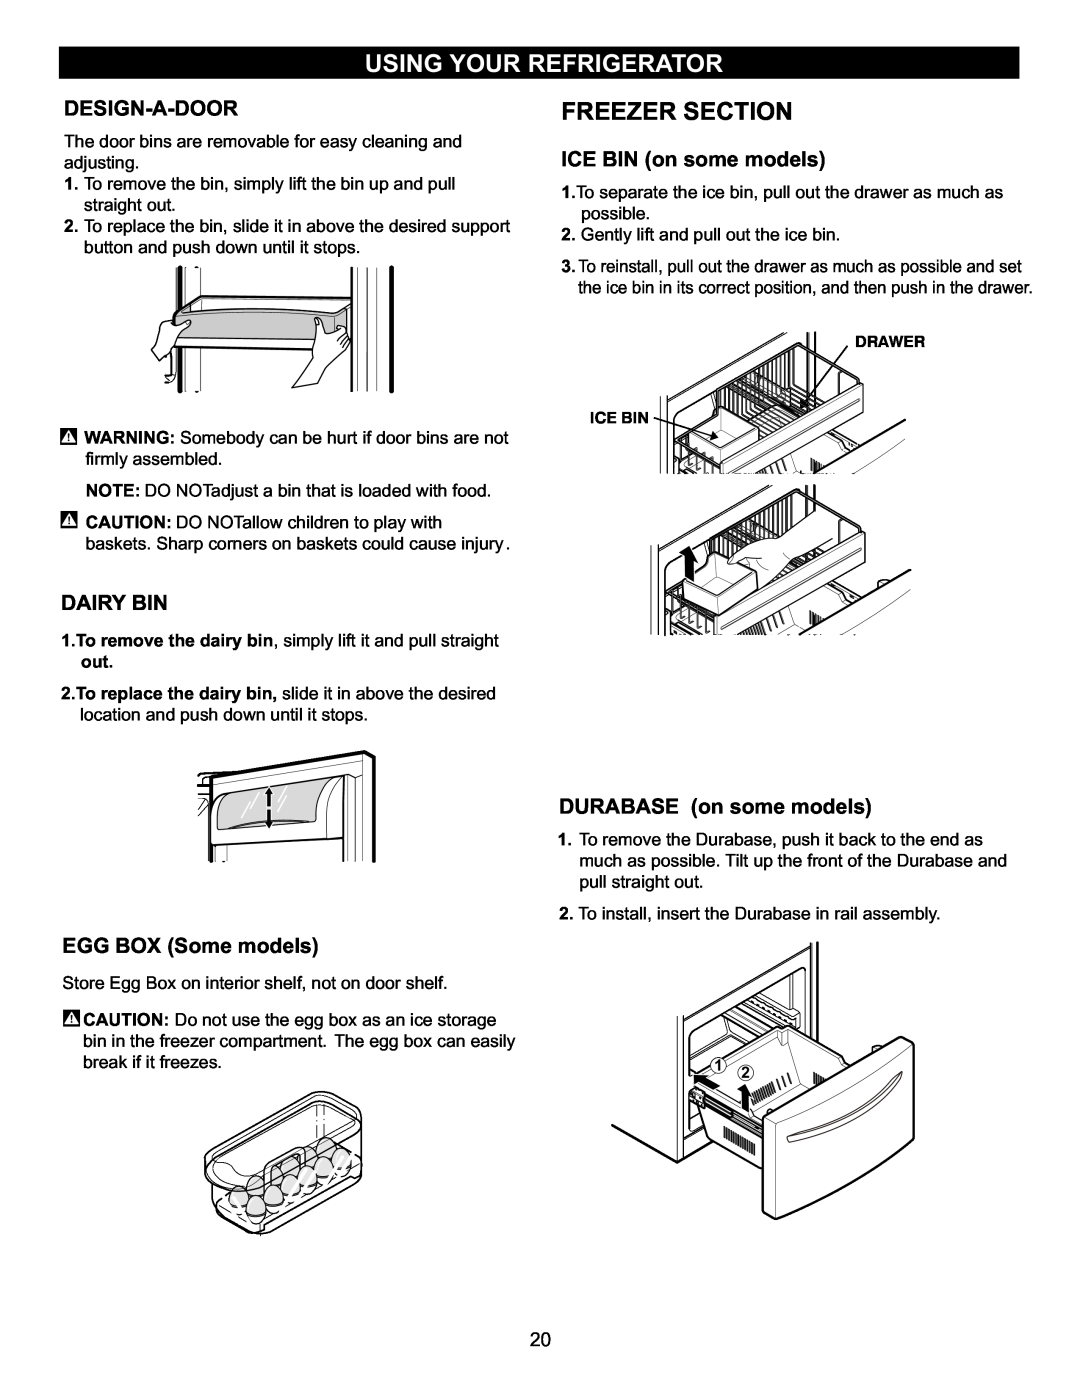 LG Electronics LFC23760 owner manual Freezer Section, Design-A-Door, Dairy Bin, ICE BIN on some models, EGG BOX Some models 